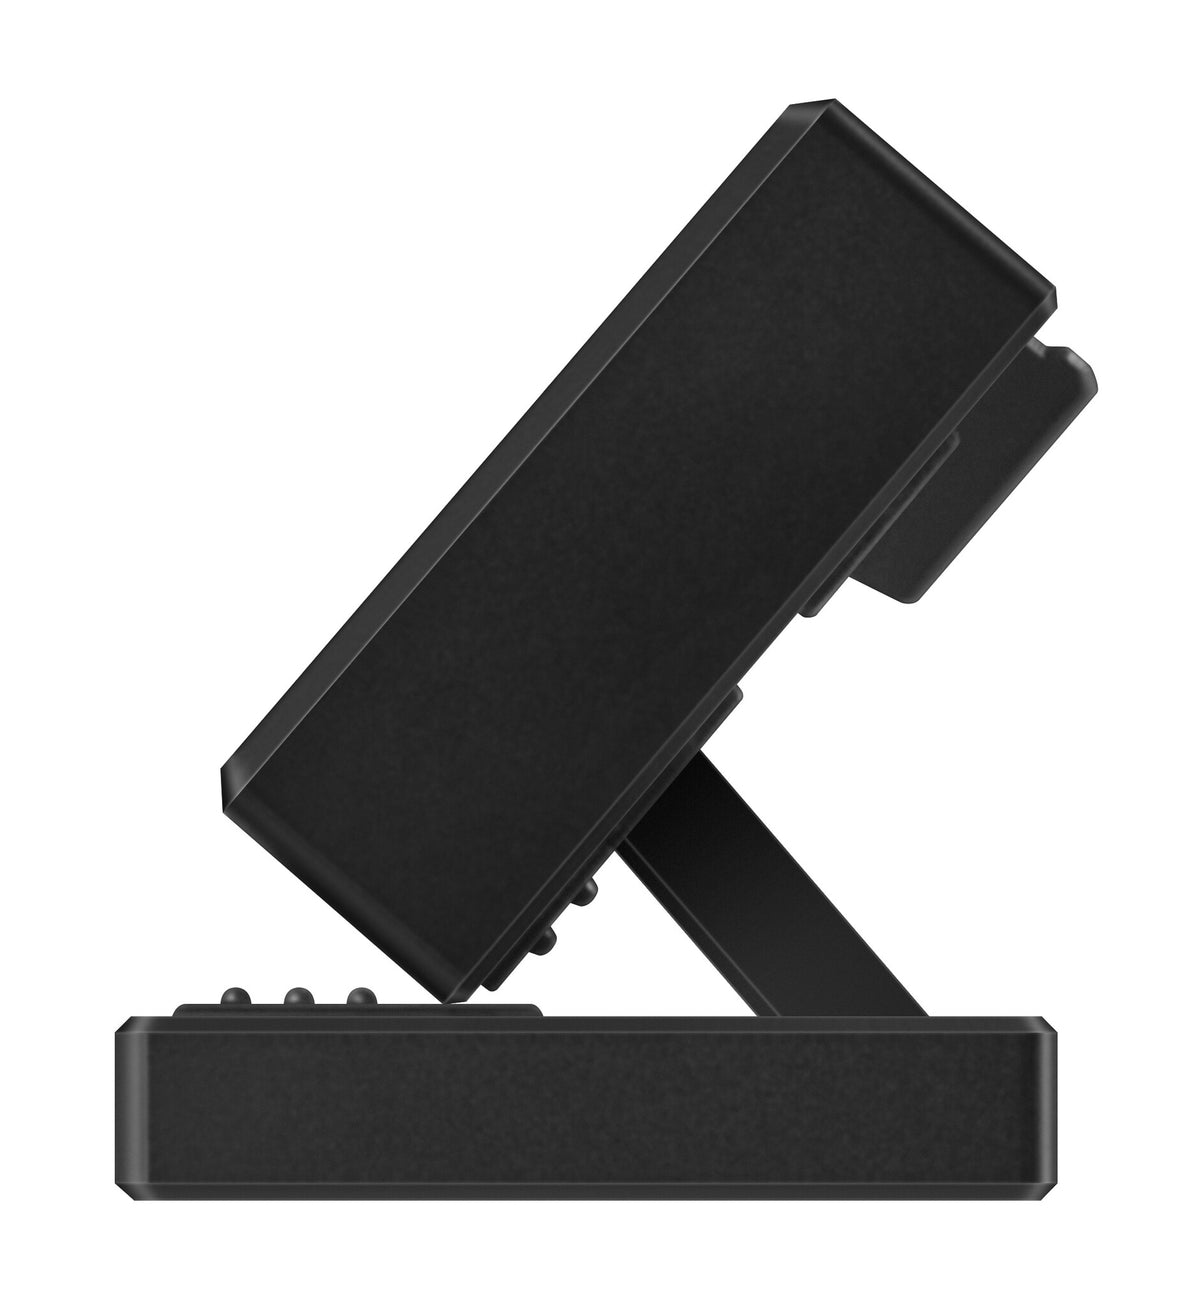 ASUS ROG EYE S - 5 MP 1920 x 1080 pixels USB webcam